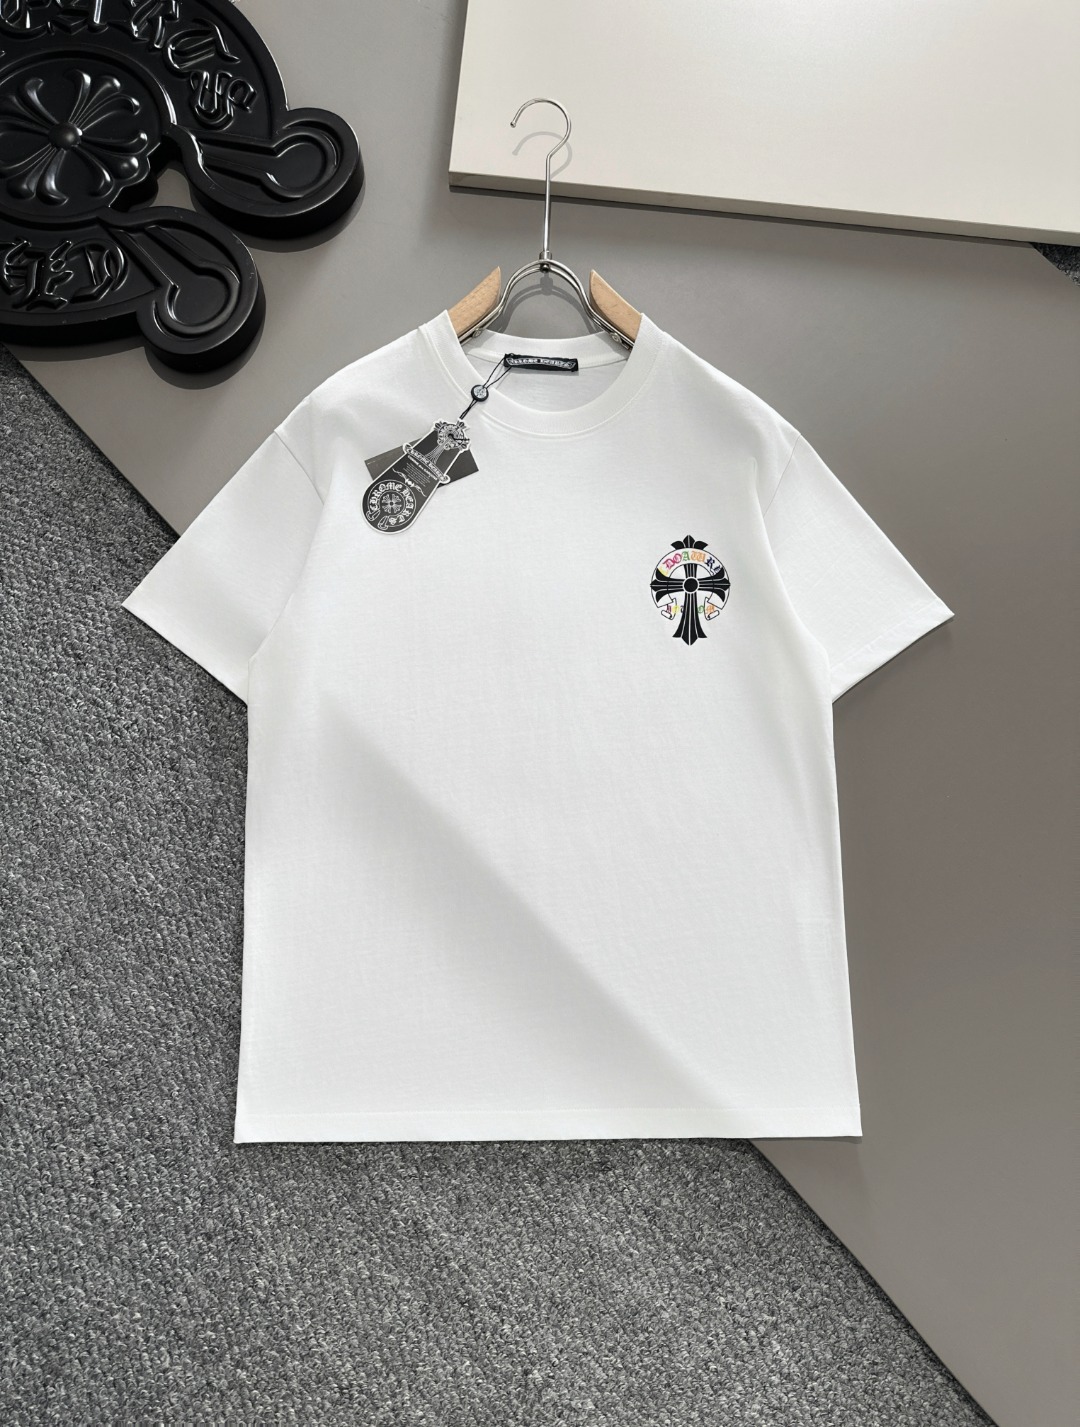 Chrome Hearts Kleding T-Shirt Elke ontwerper
 Zwart Wit Katoen Lente/Zomercollectie Fashion Korte mouw